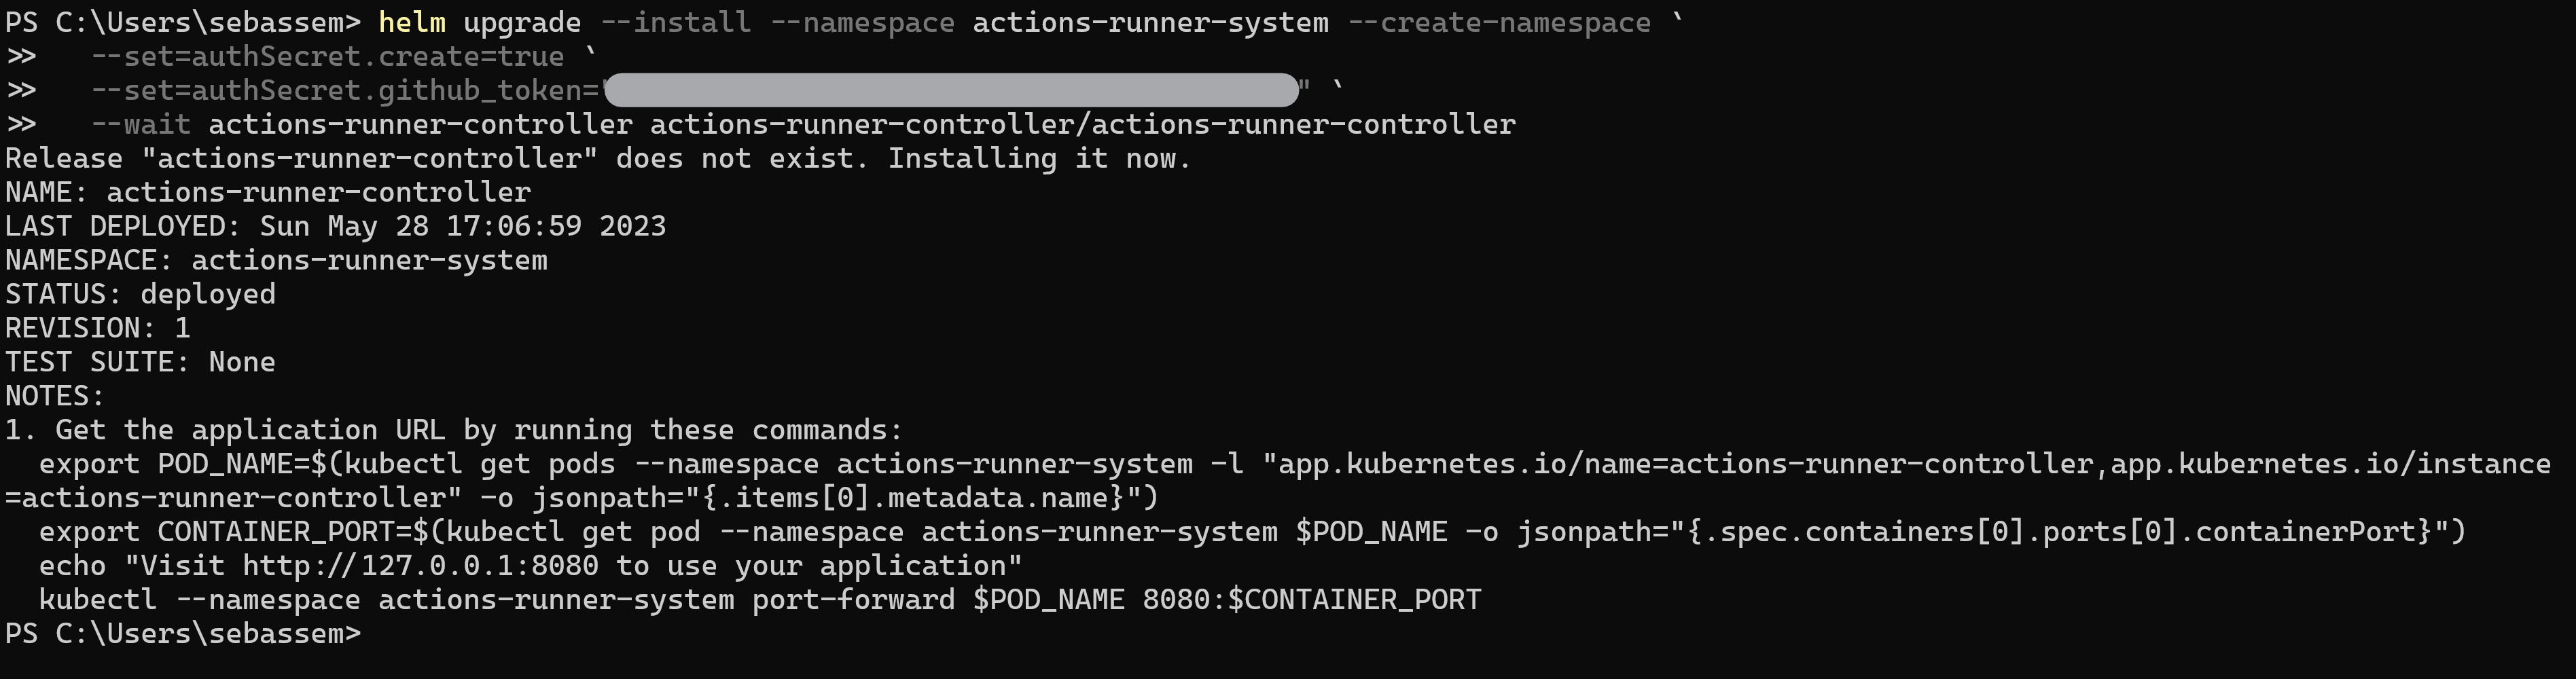 Screenshot showing installing actions runner controller using helm